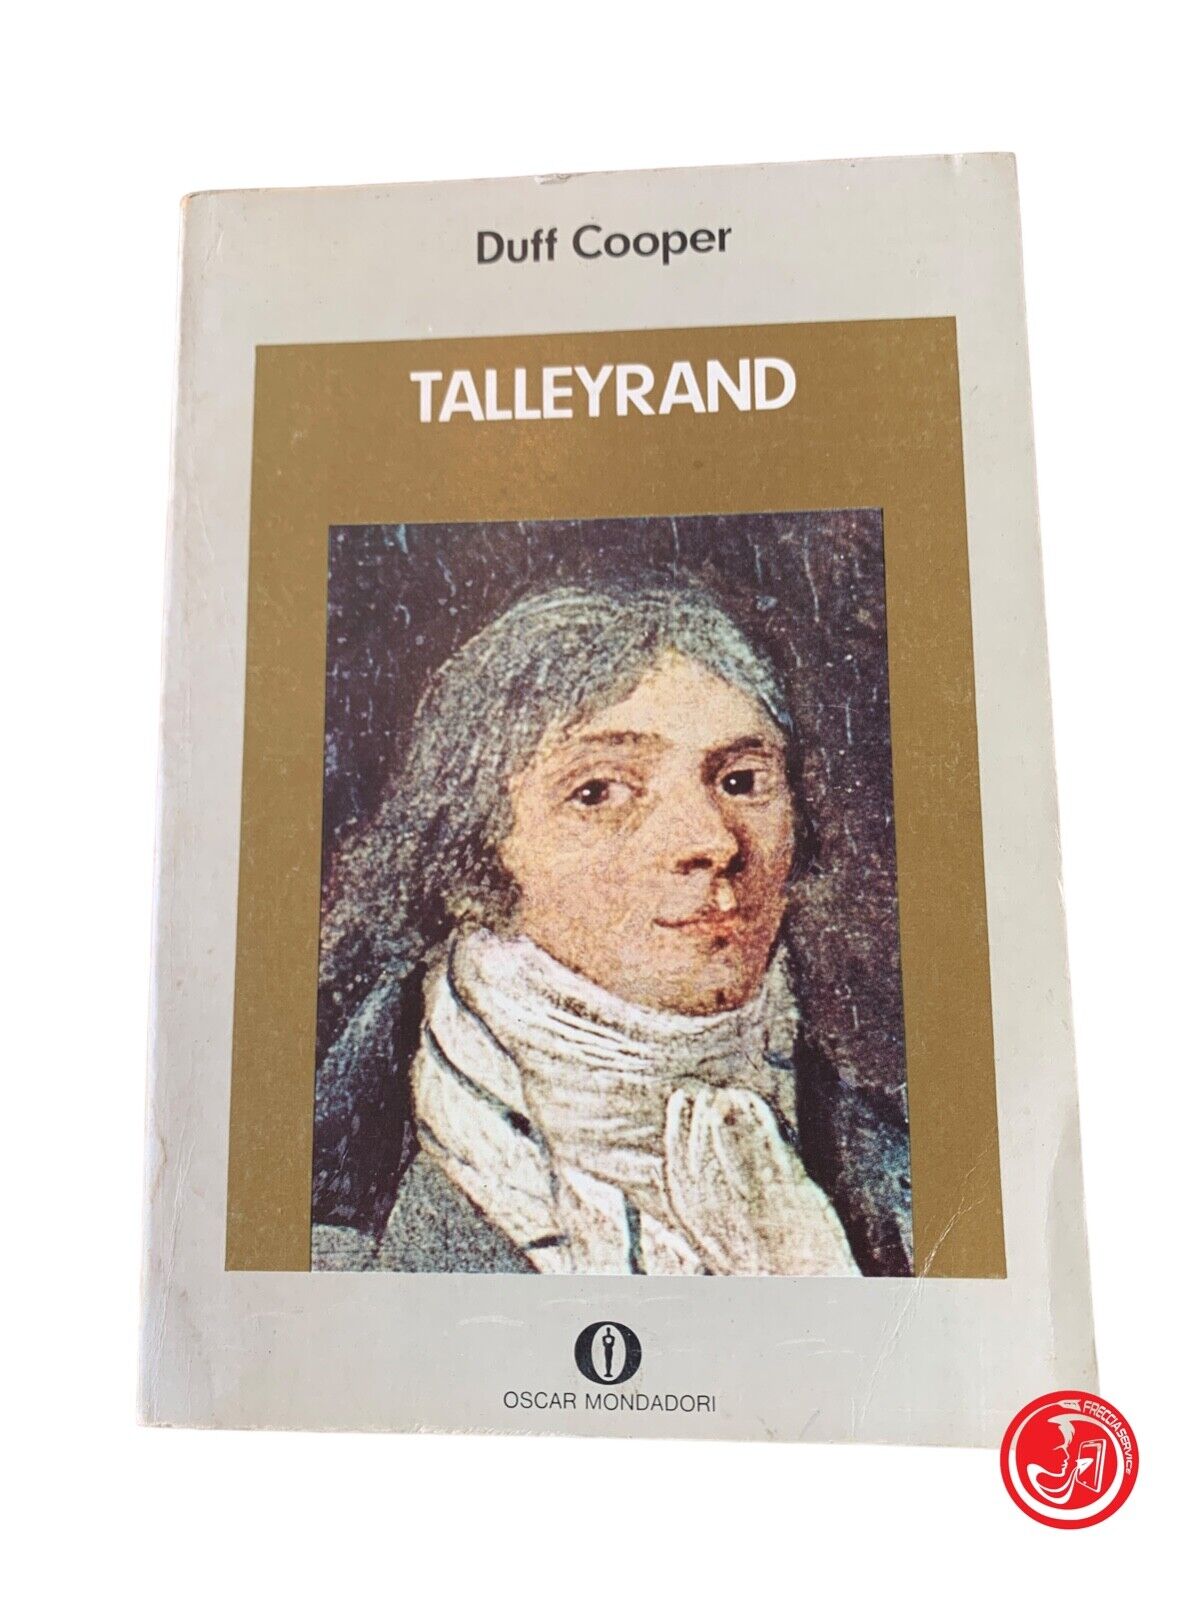 Talleyrand - Duff Cooper - Mondadori 1974